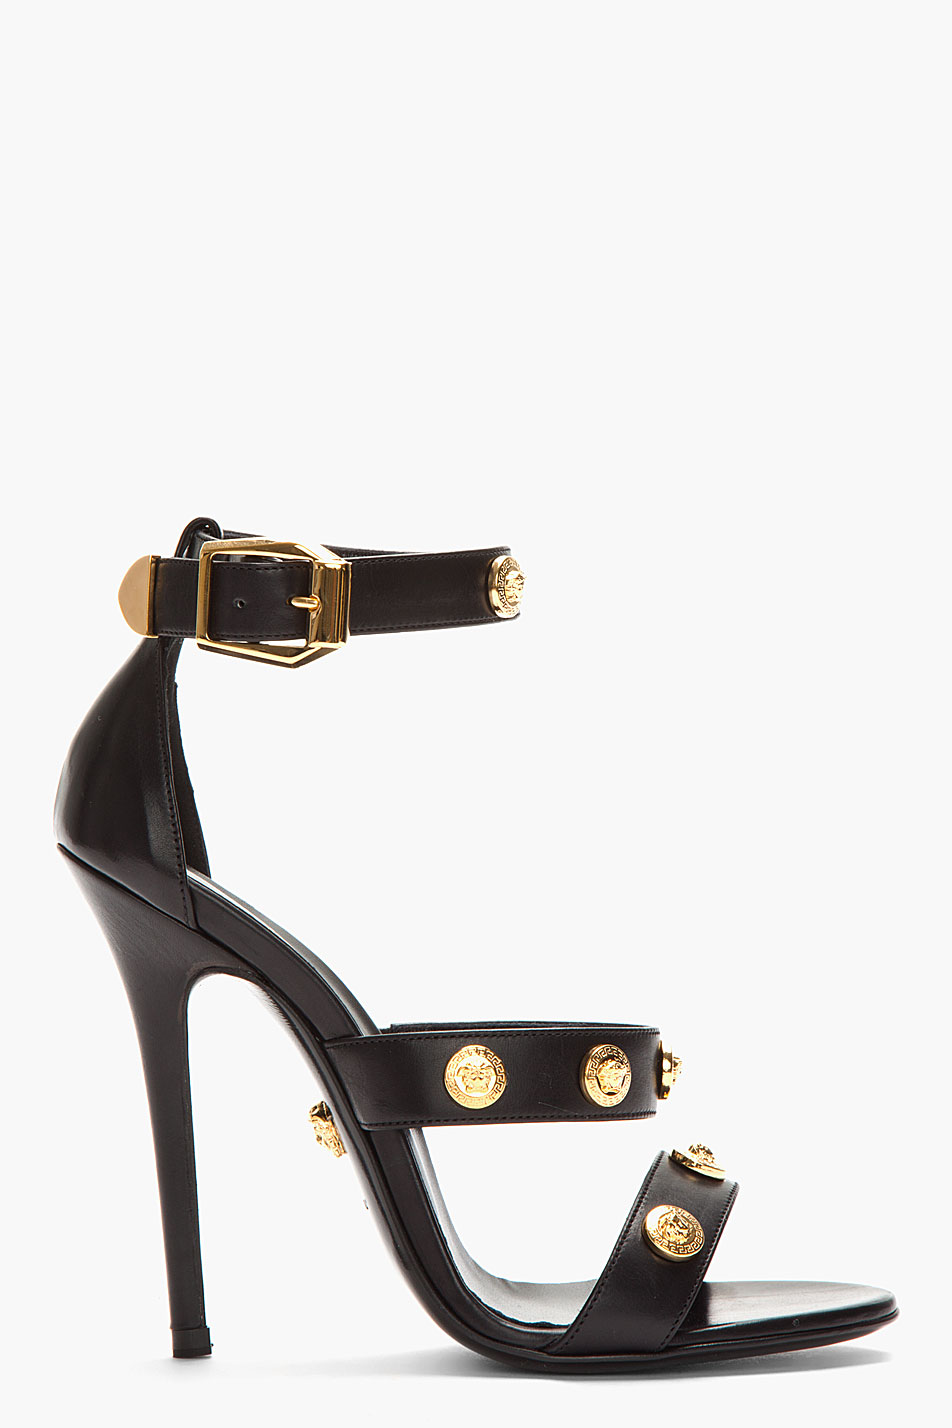 Versace Leather Signature Medusa High Heel Sandal Black/light Gold - Lyst